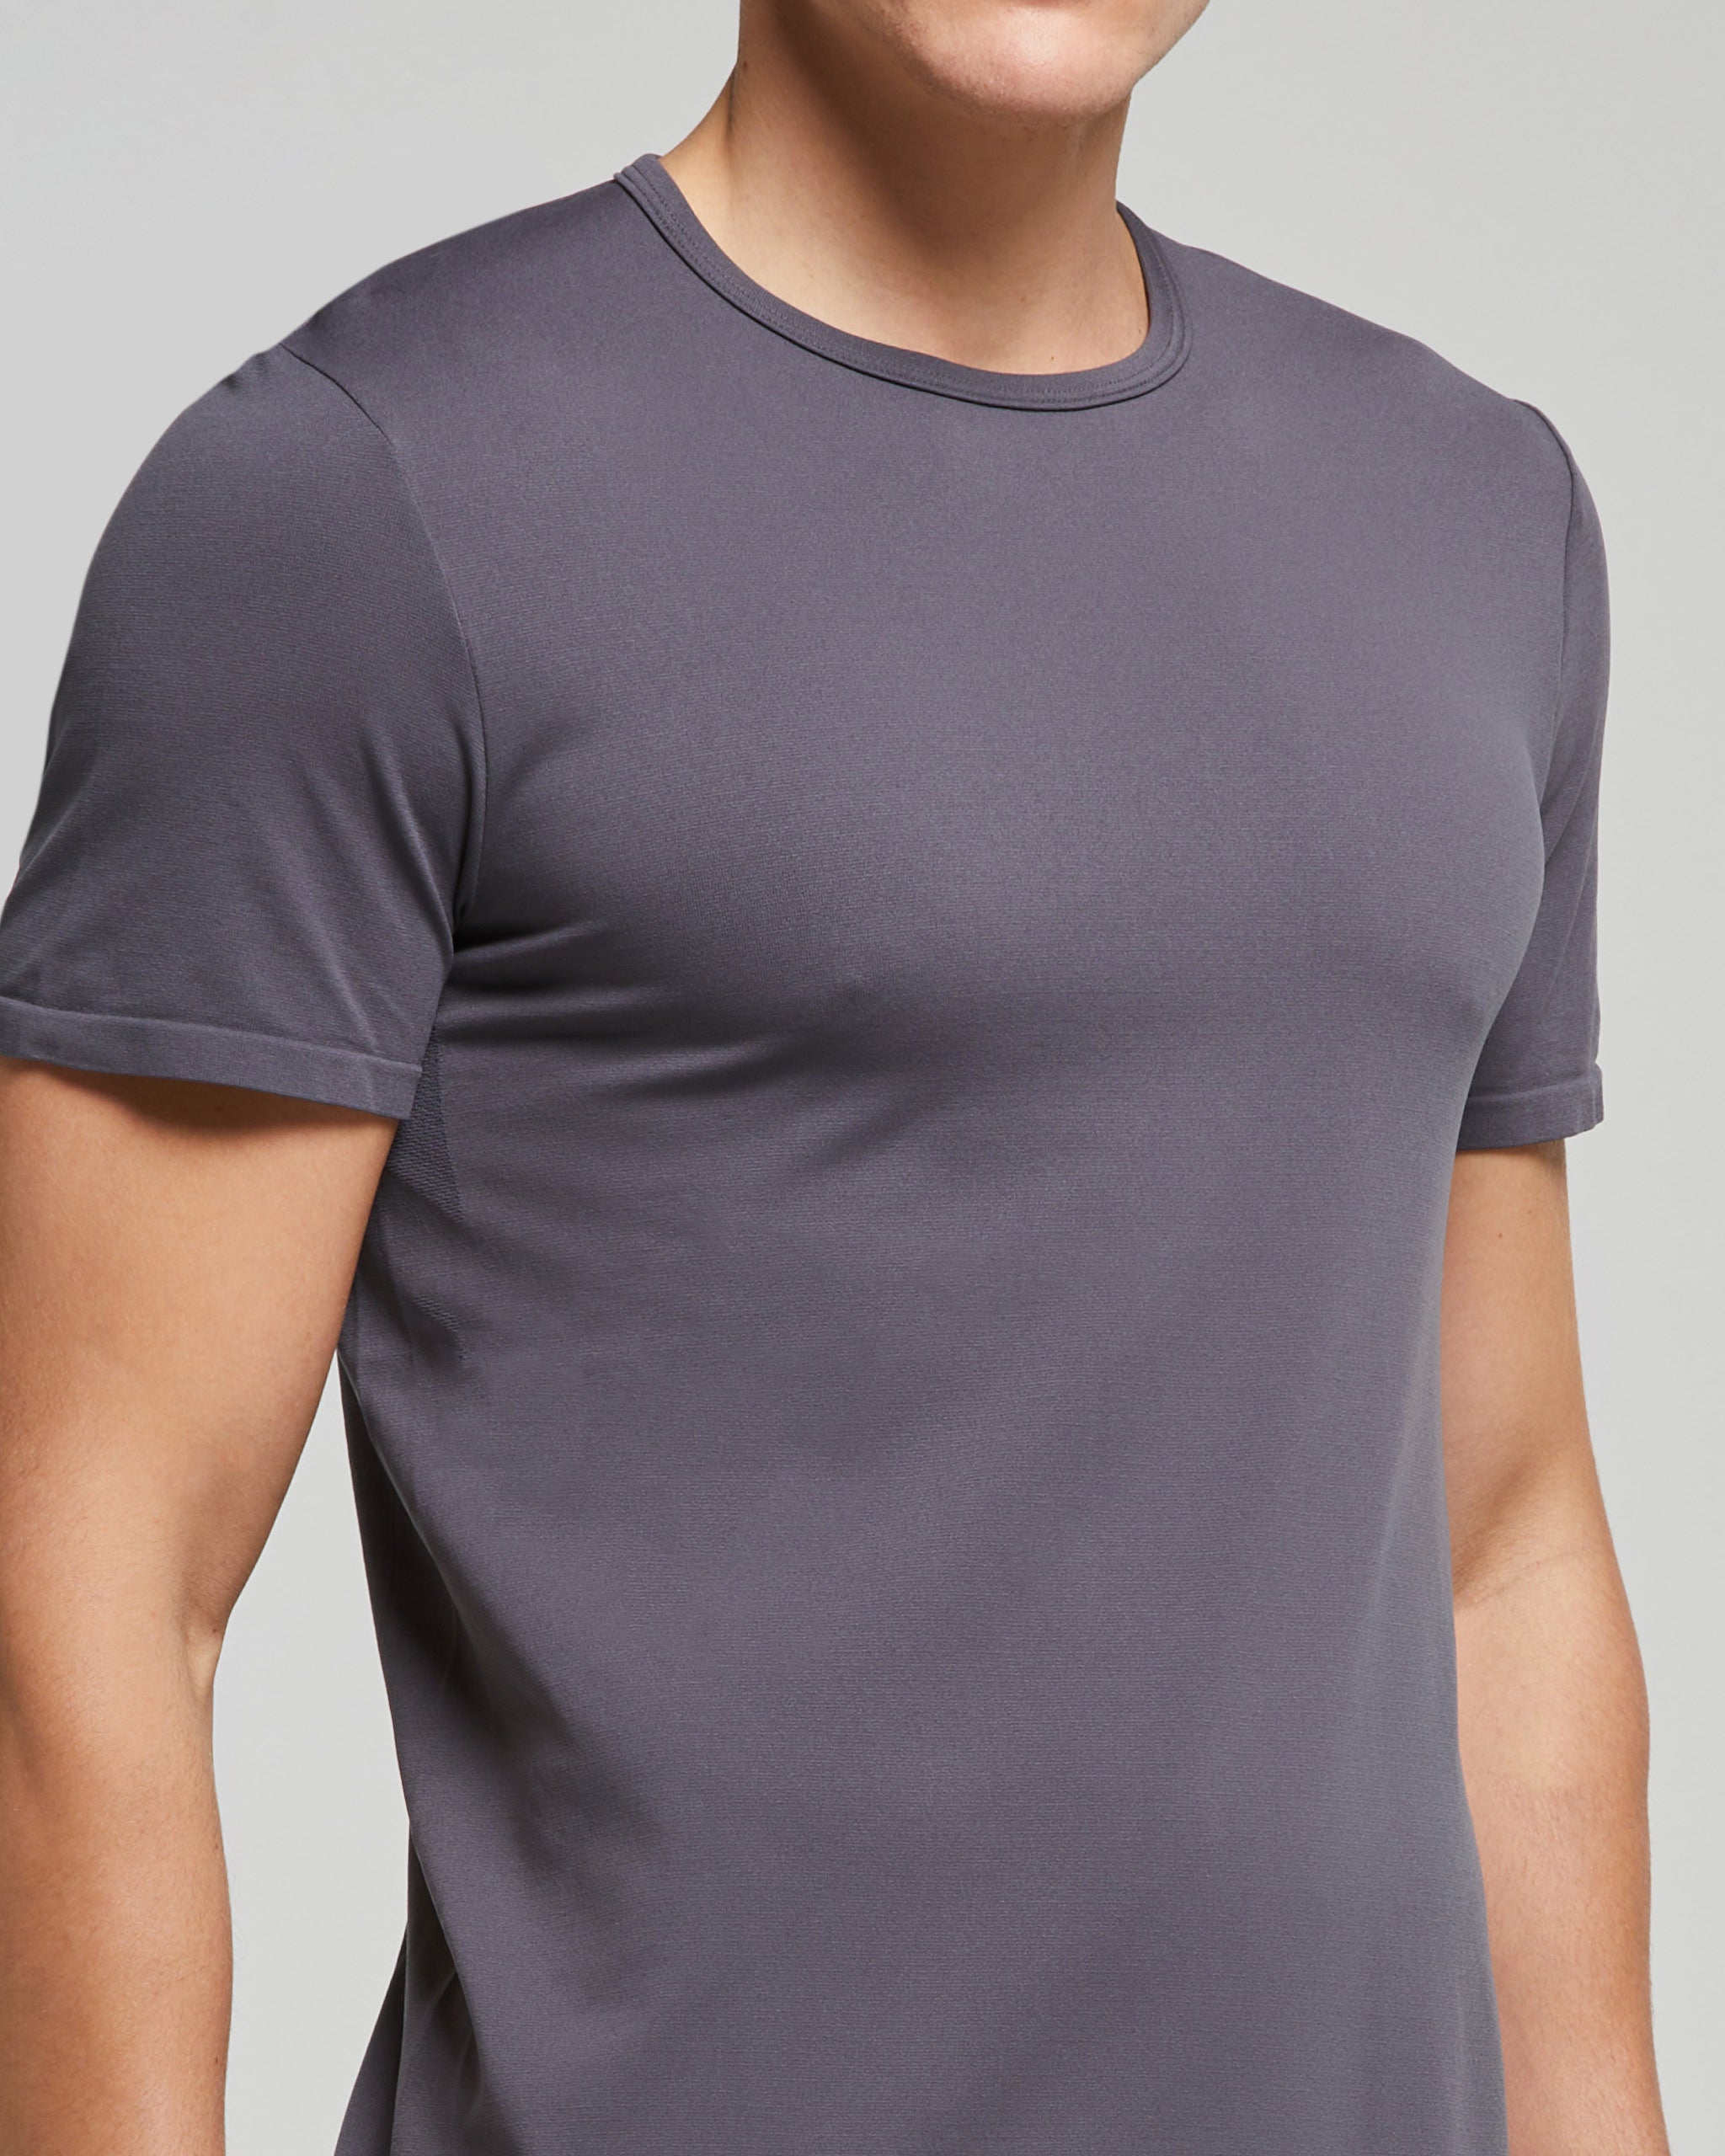 Seamless T-Shirt vest